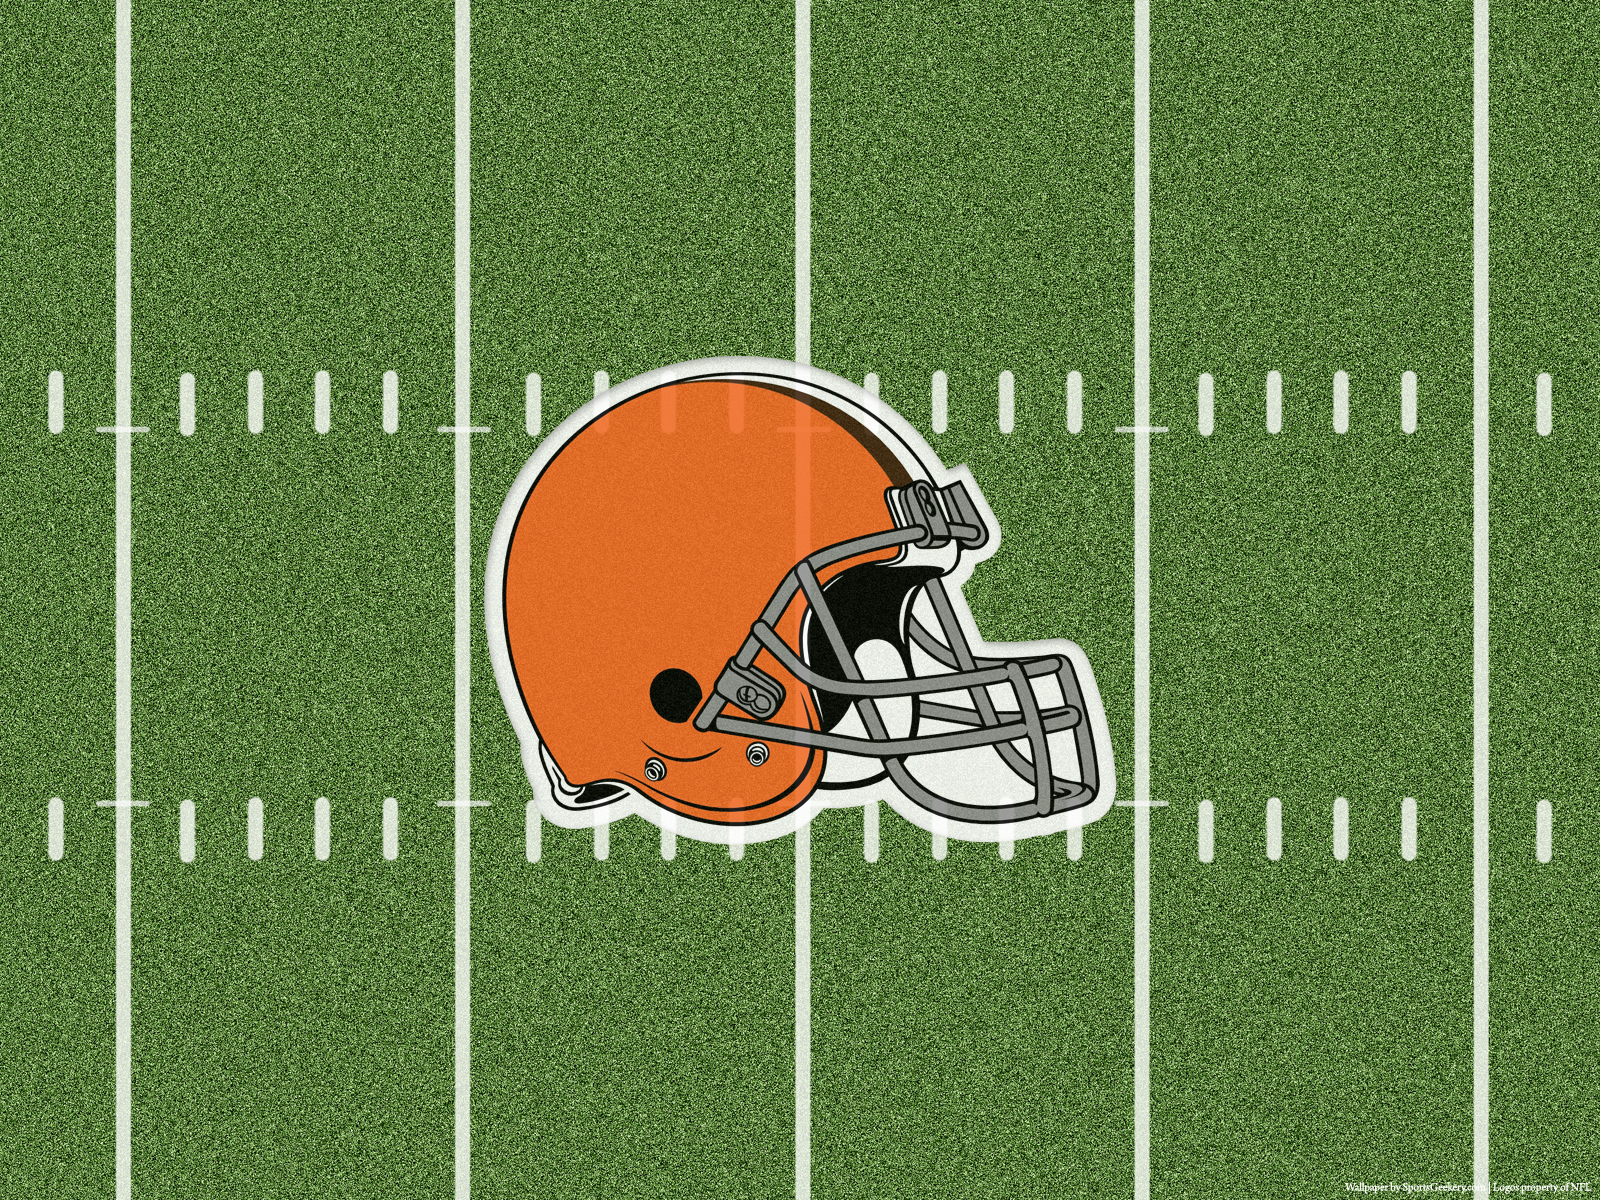 Cleveland Browns For Desktop Wallpaper - 2023 NFL Football Wallpapers